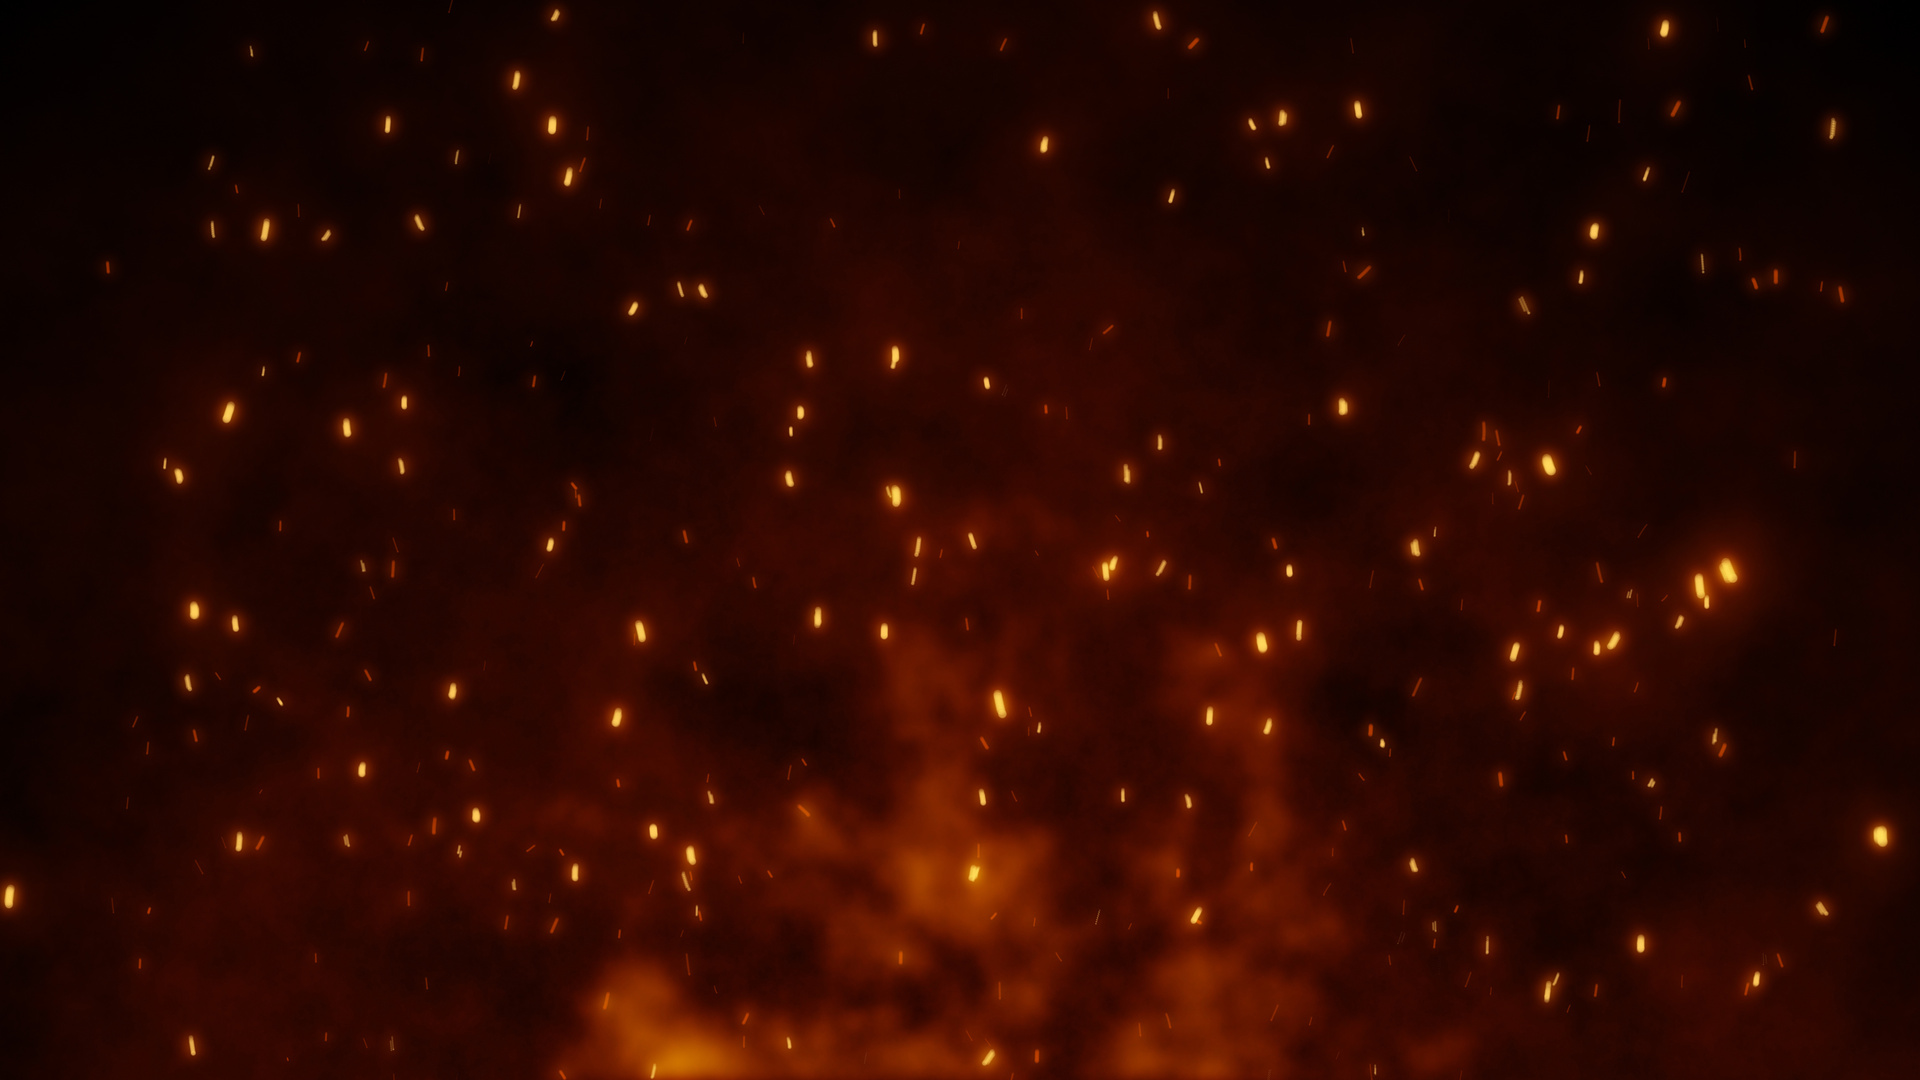 Fire sparkler background